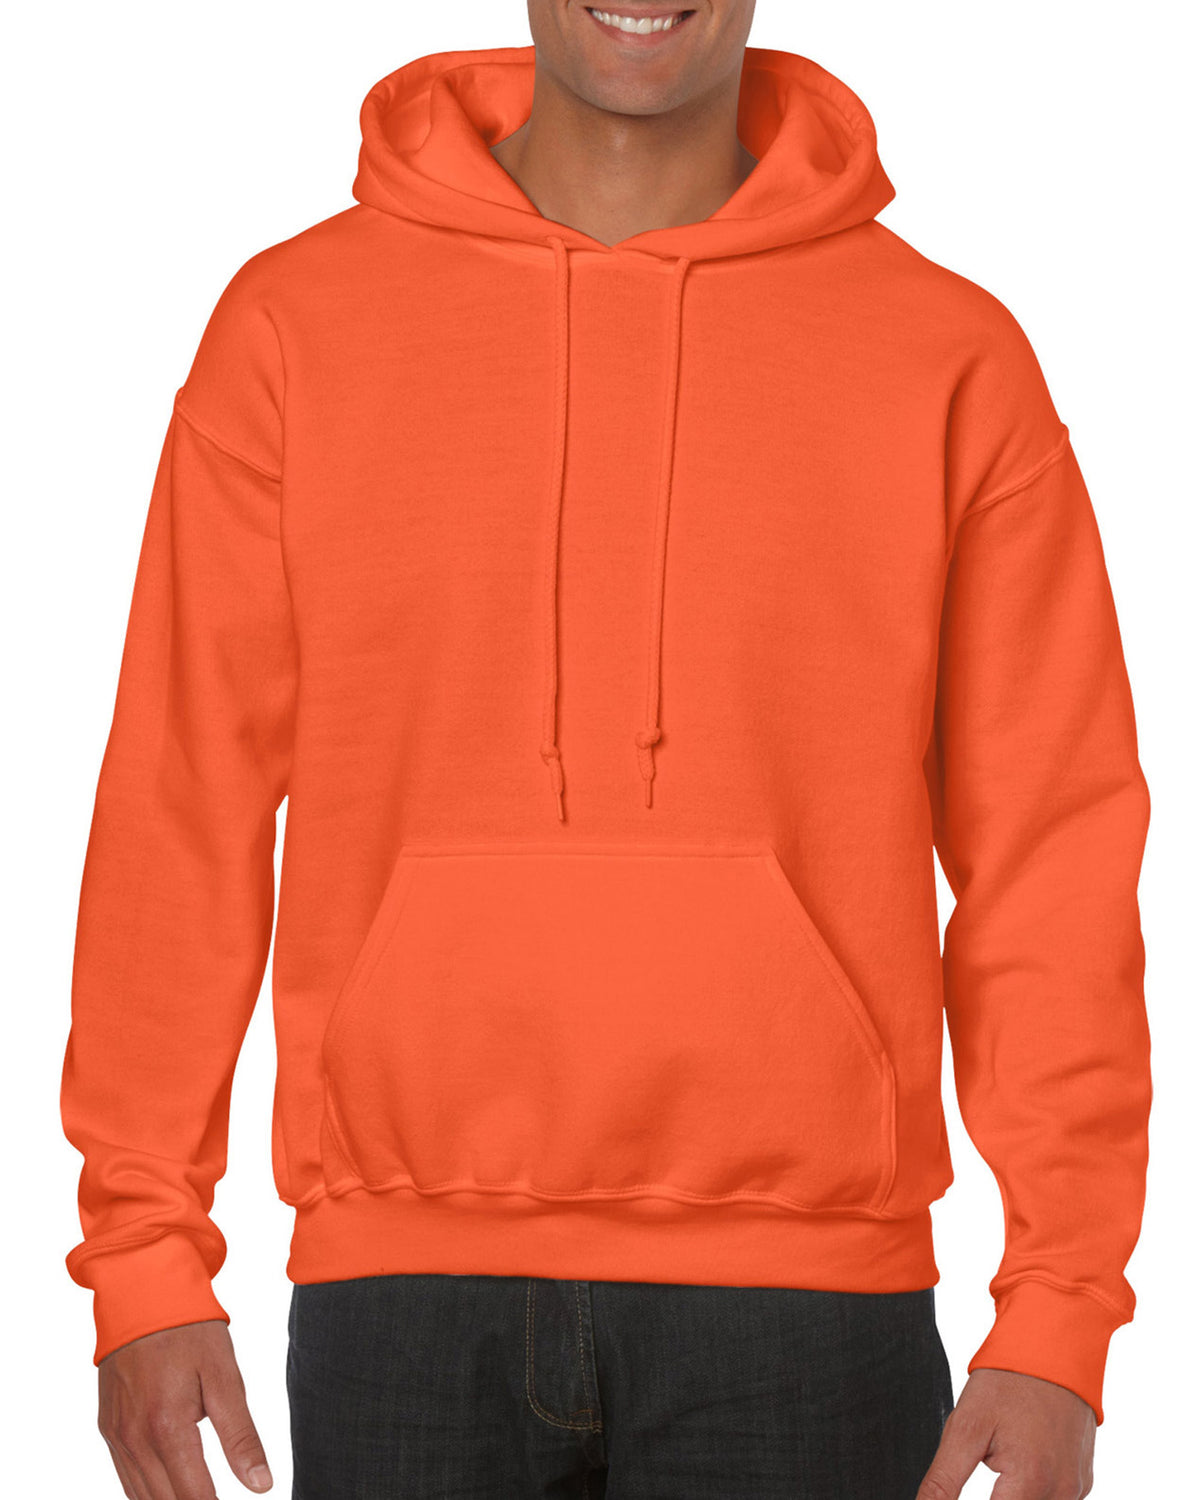 Orange  Heavy Blend Adult Hooded Sweatshirt